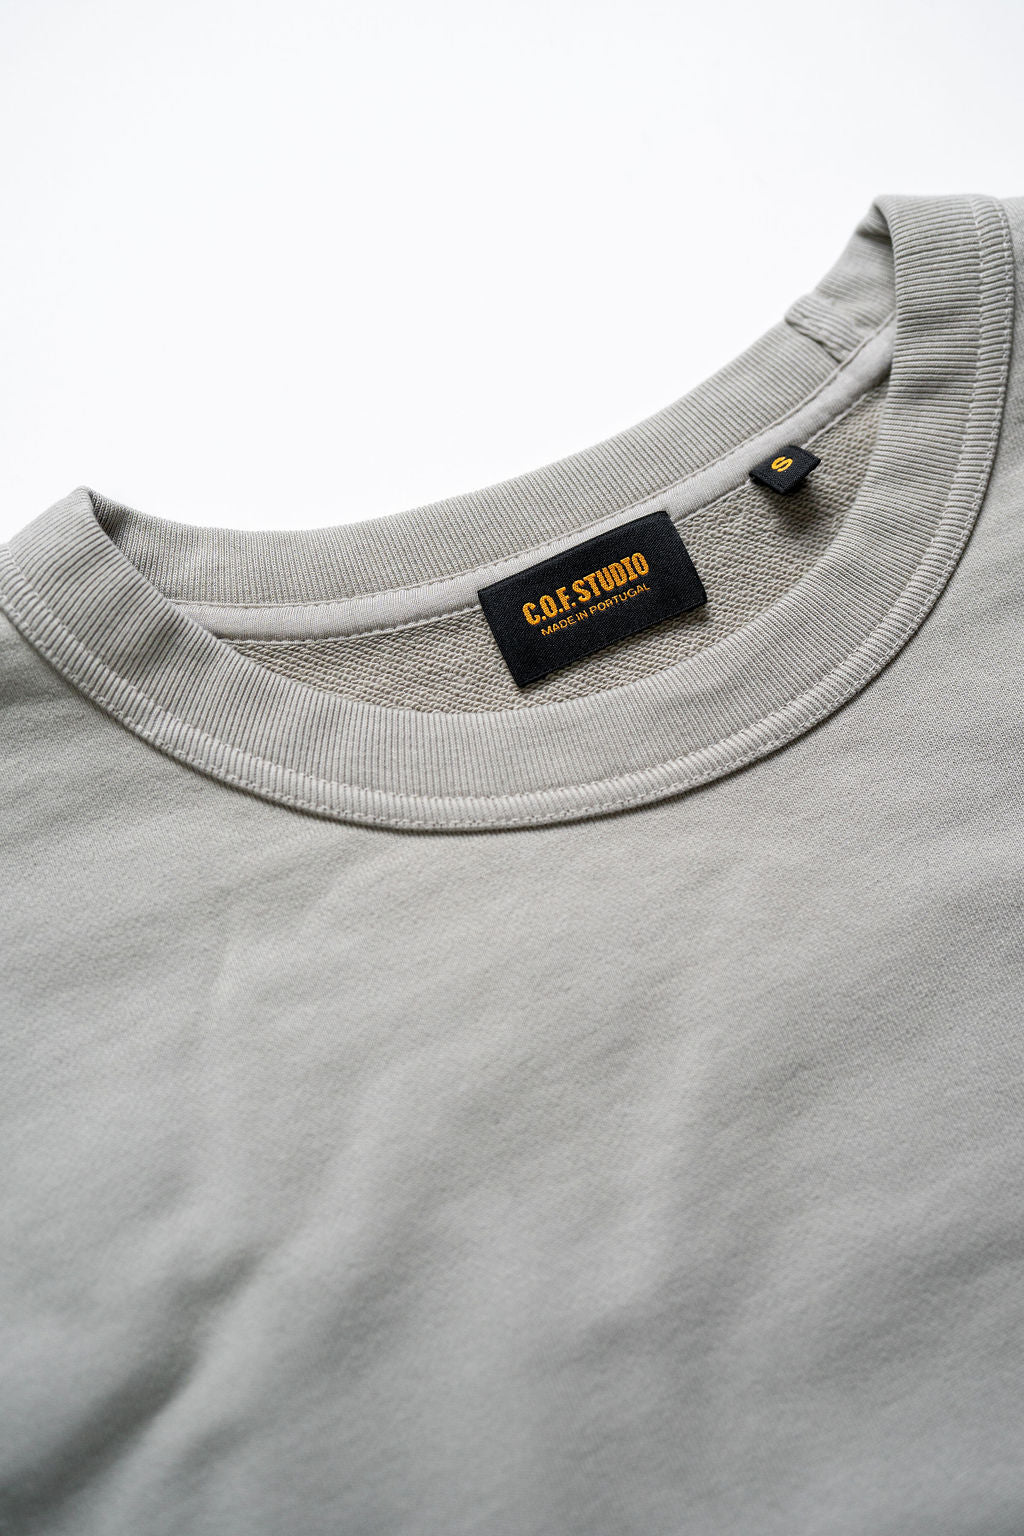 C.O.F. Studio Sweatshirt - Unbrushed Terry Cement